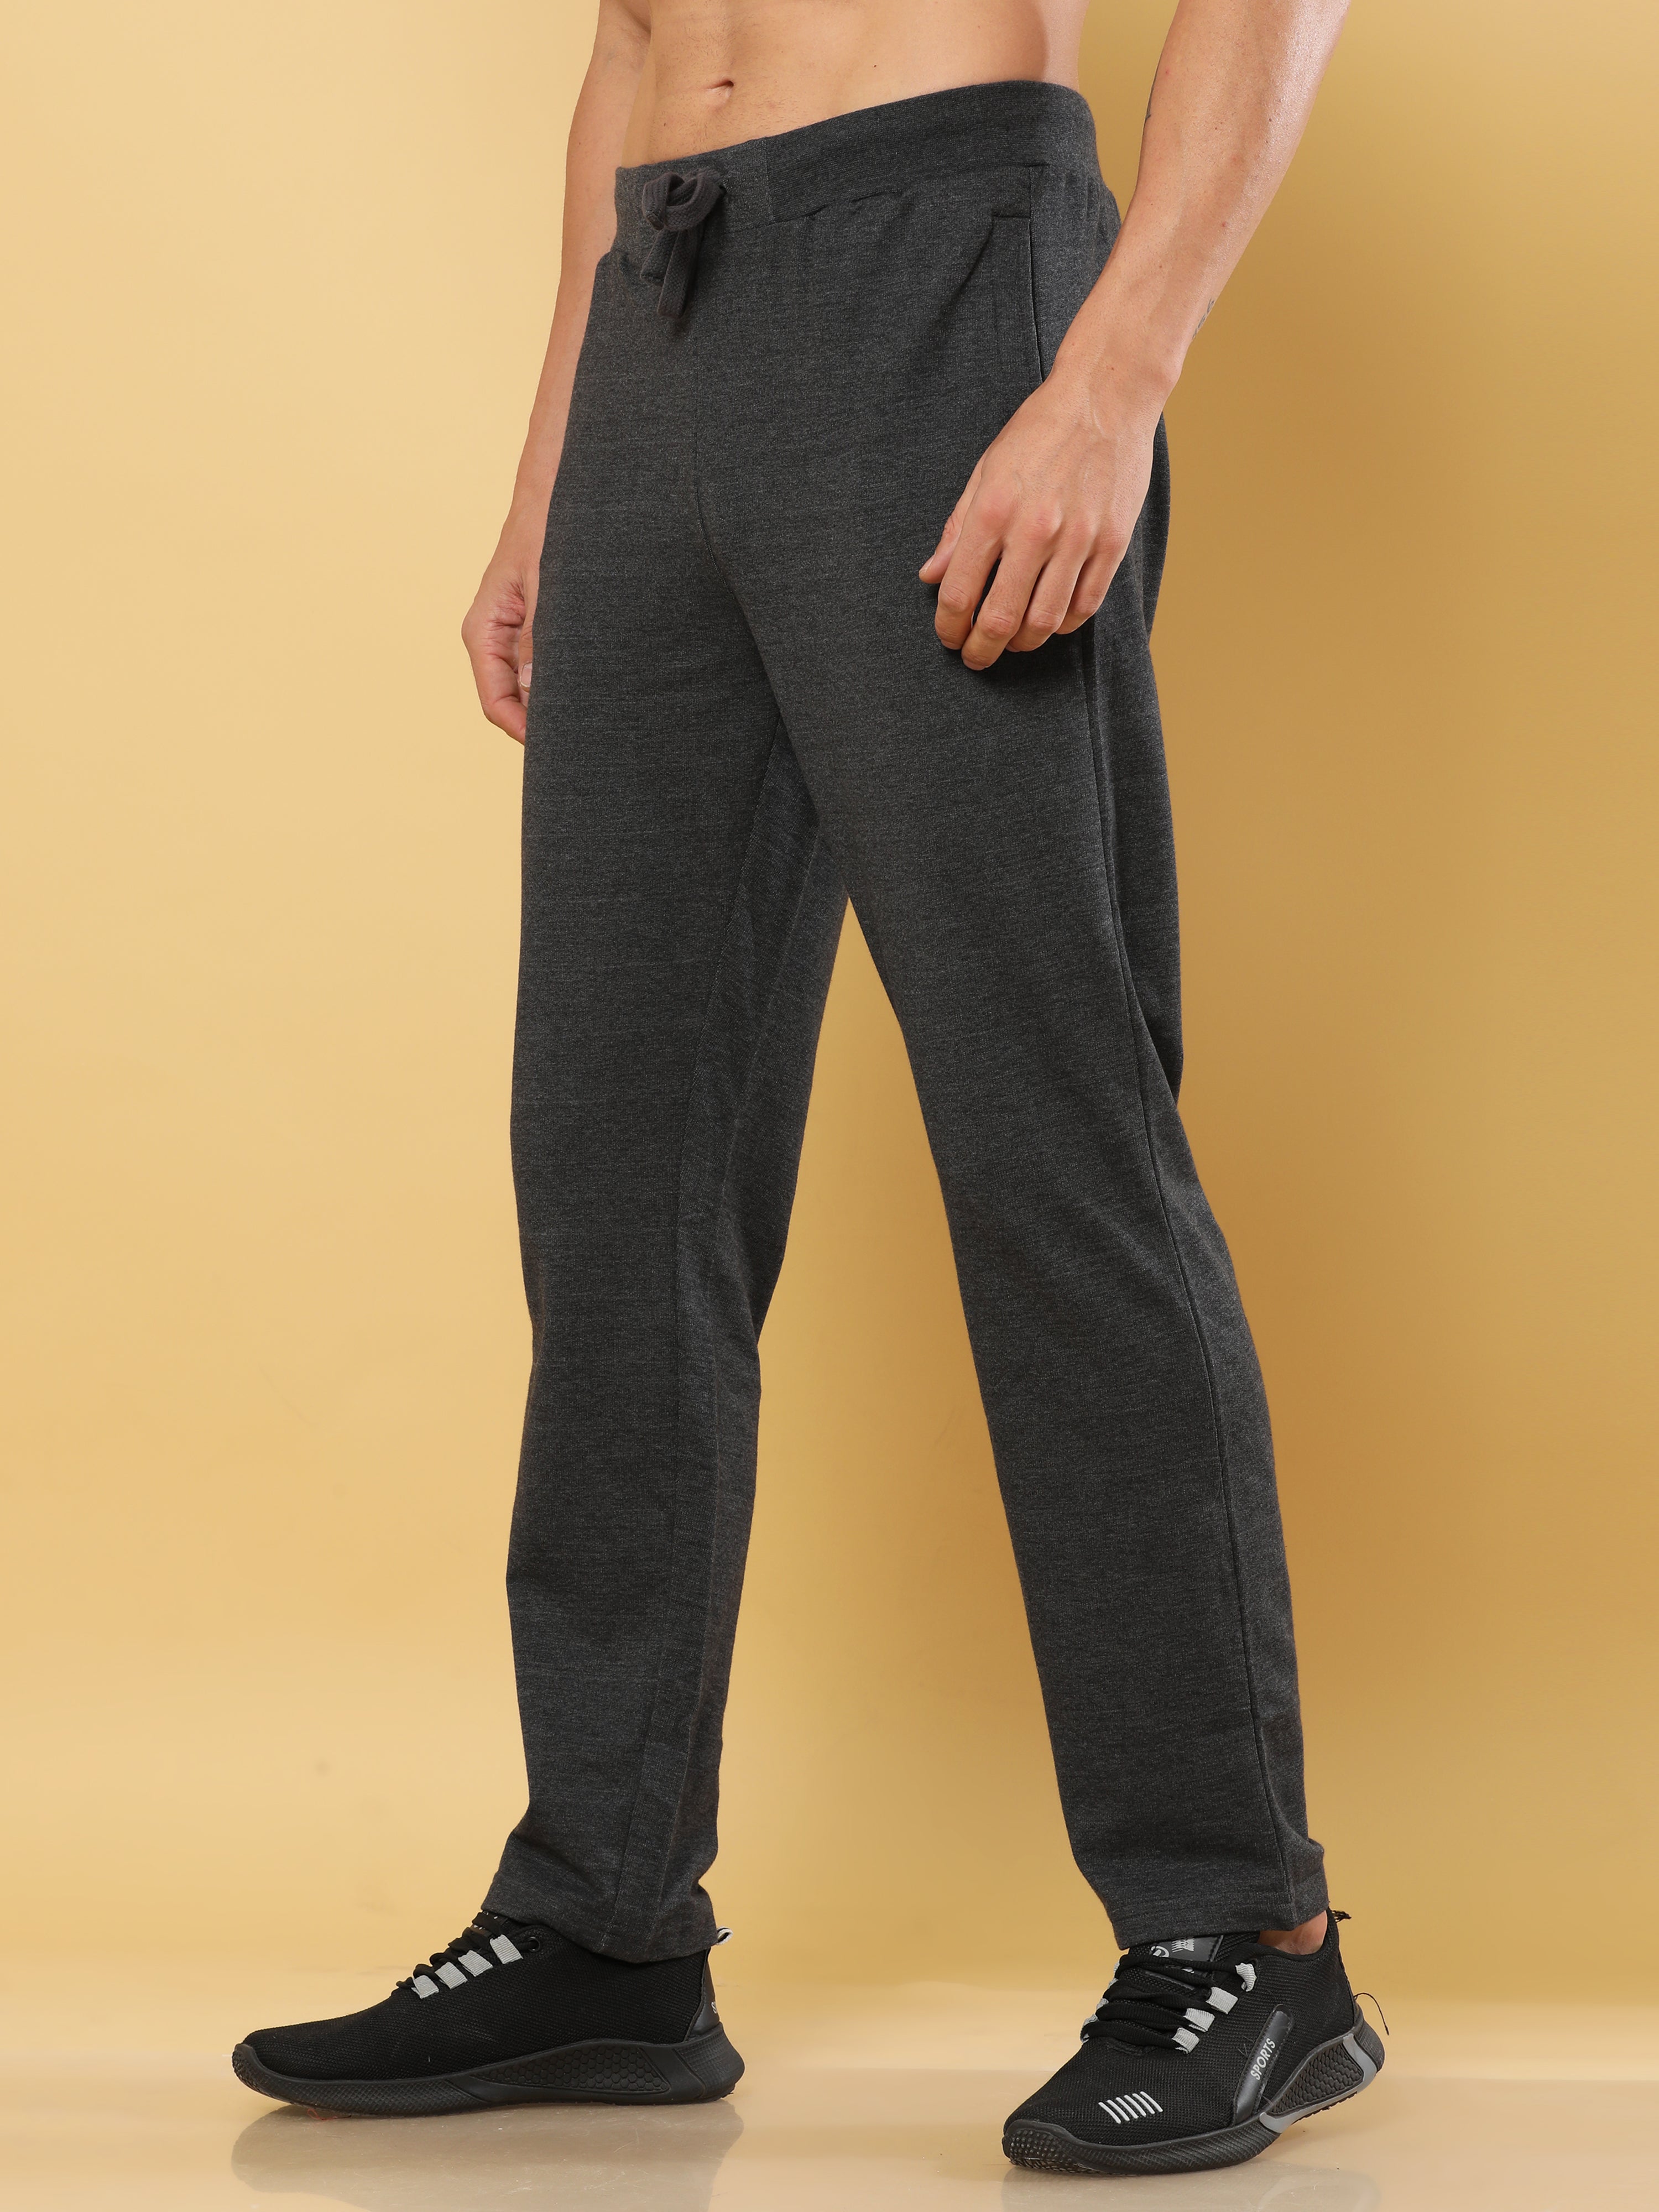 Buy Men's Lounge Pants Pack of 2| Black & Brown Stripes | Fits Waist Size  28